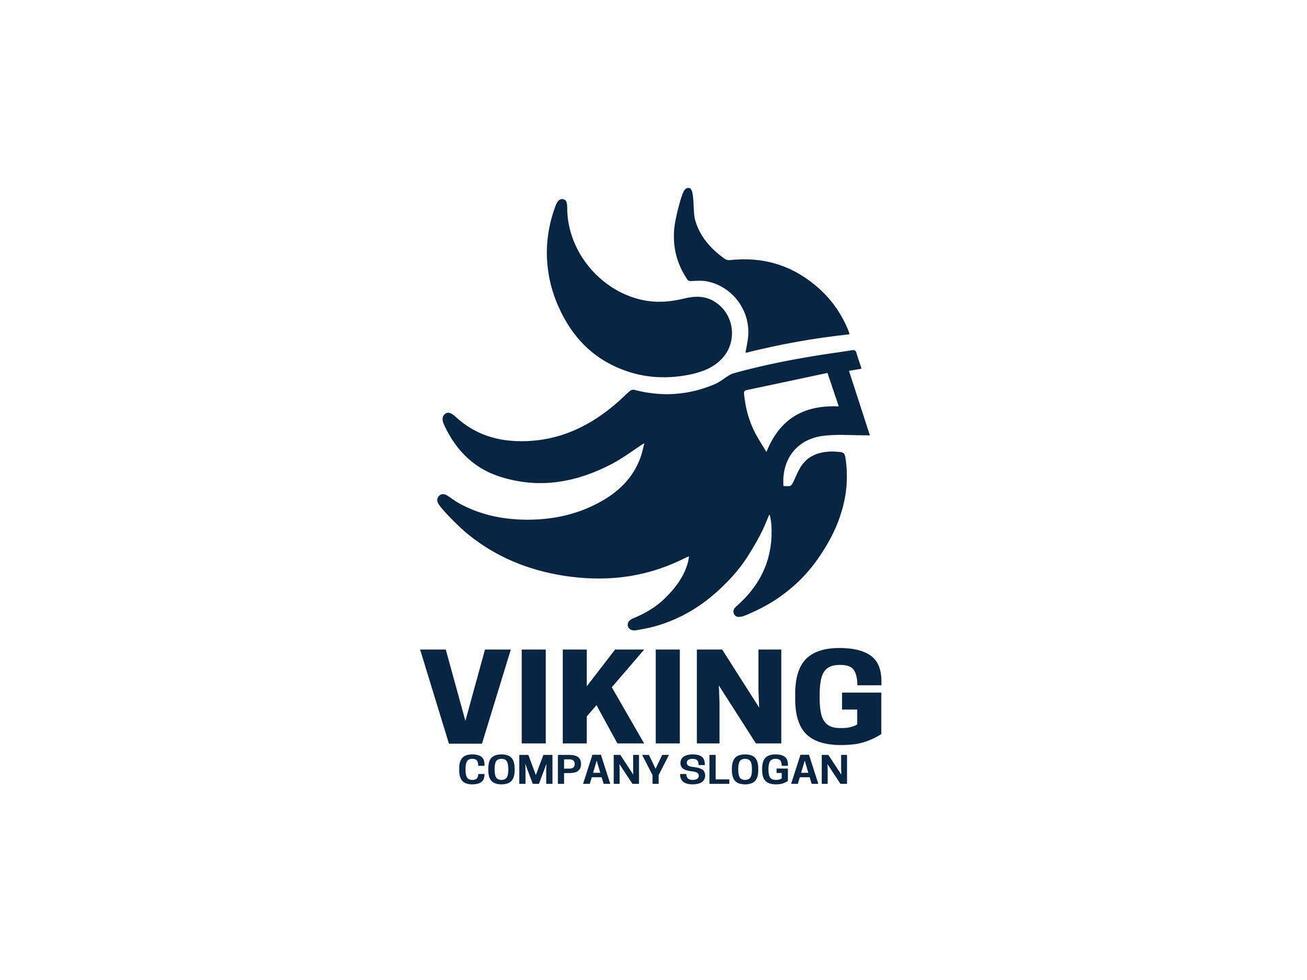 Viking Head Logo Design Template vector